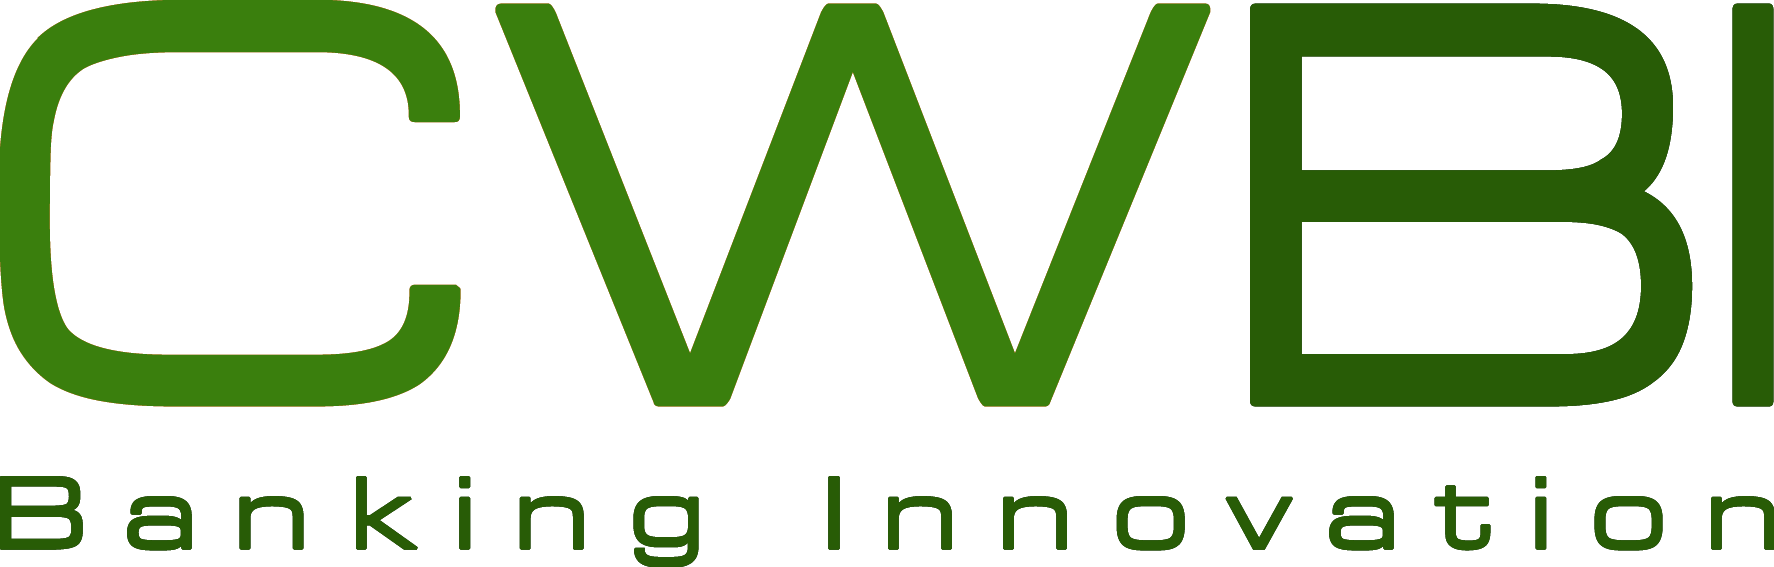 CWBI Codice Web Banking Innovation